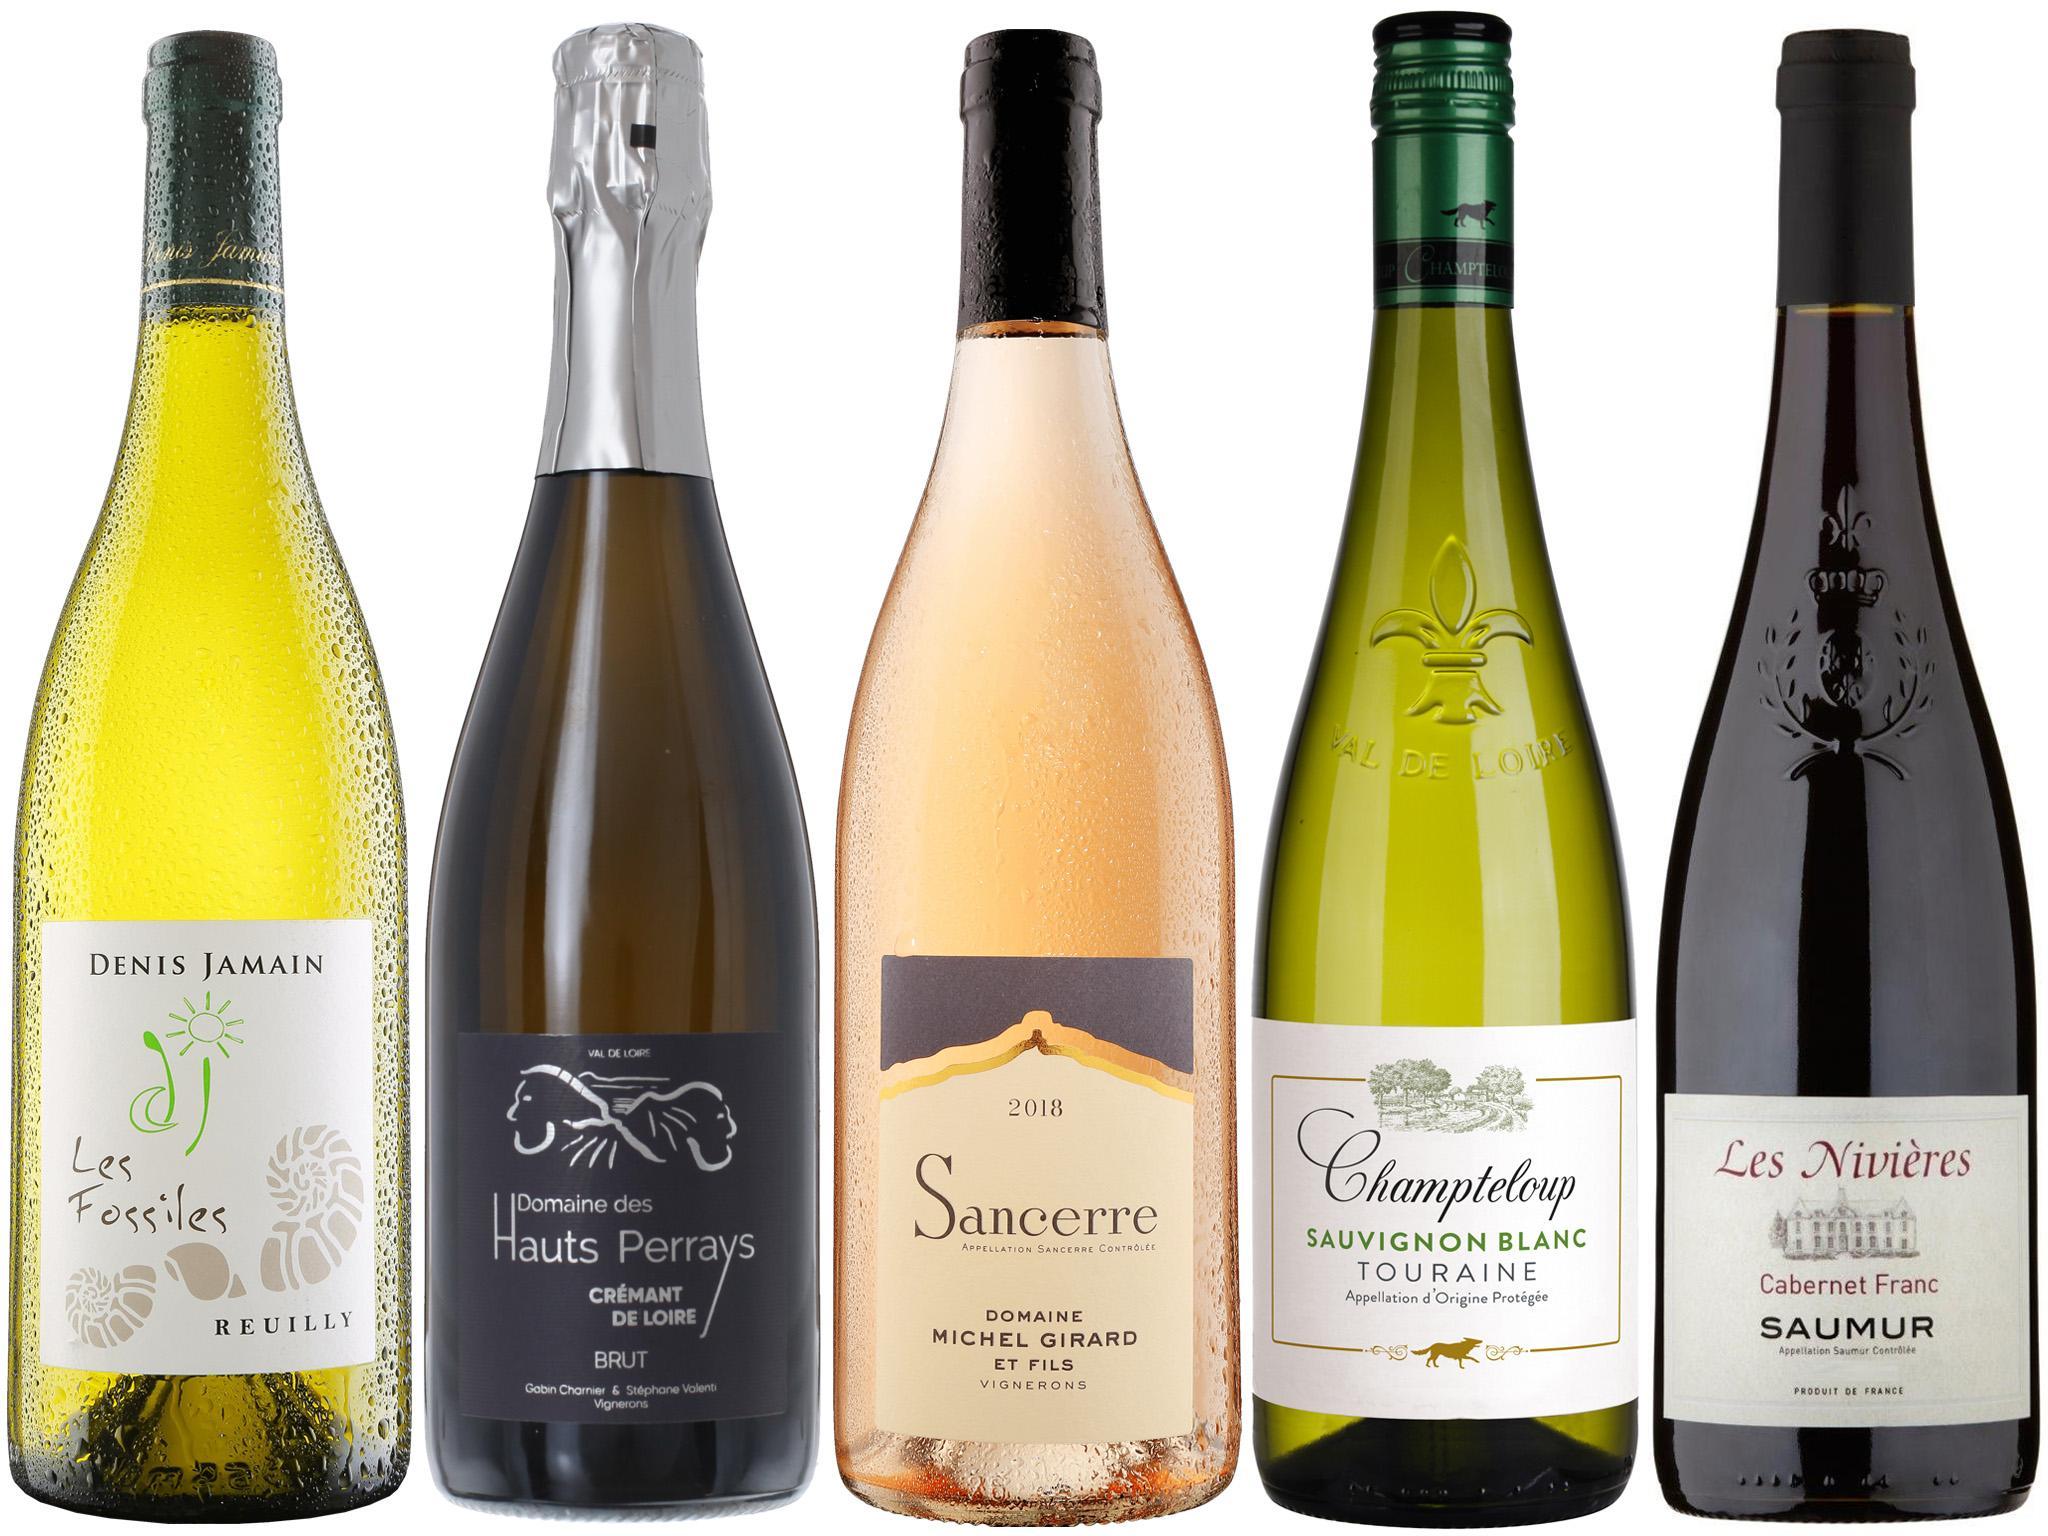 Wines of the week: 10 bottles from the Loire region